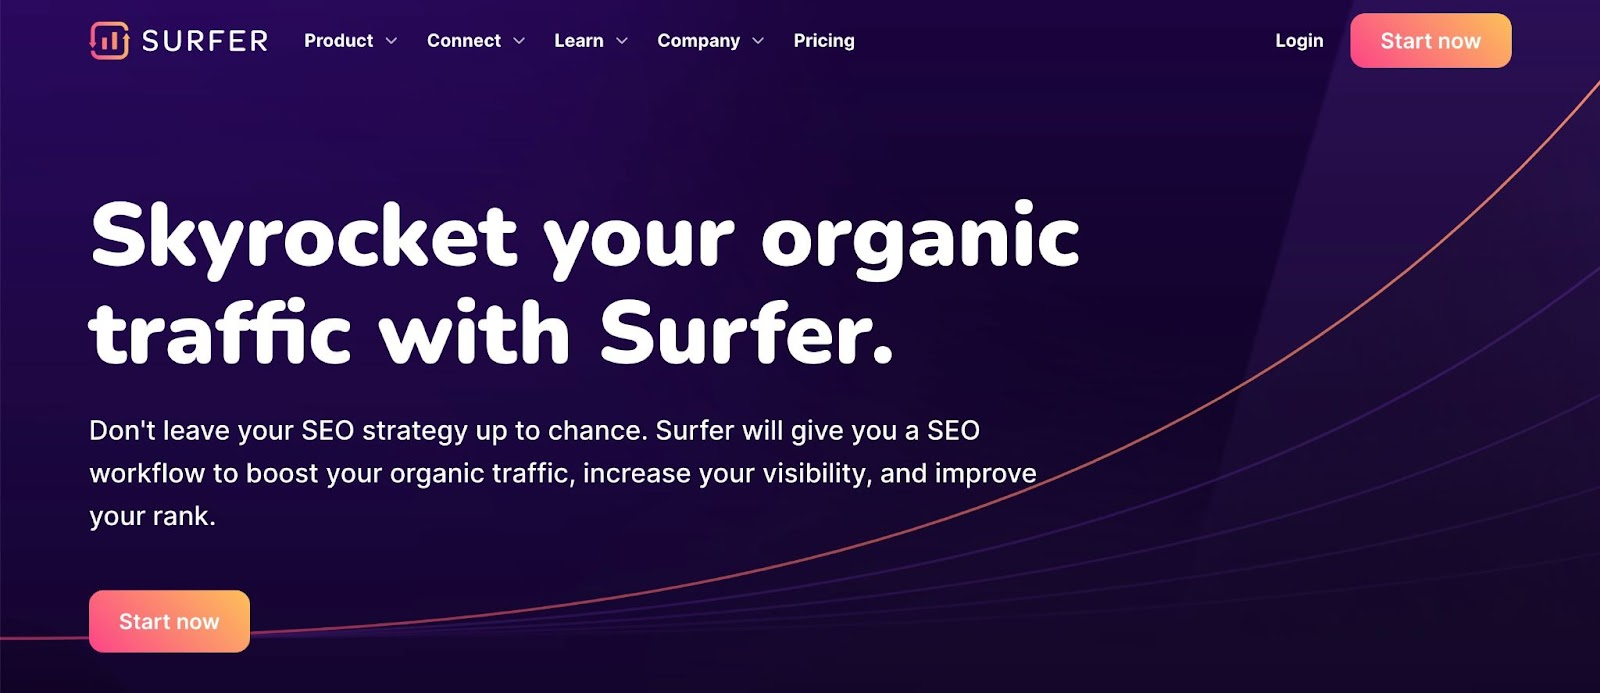 Logo surfer